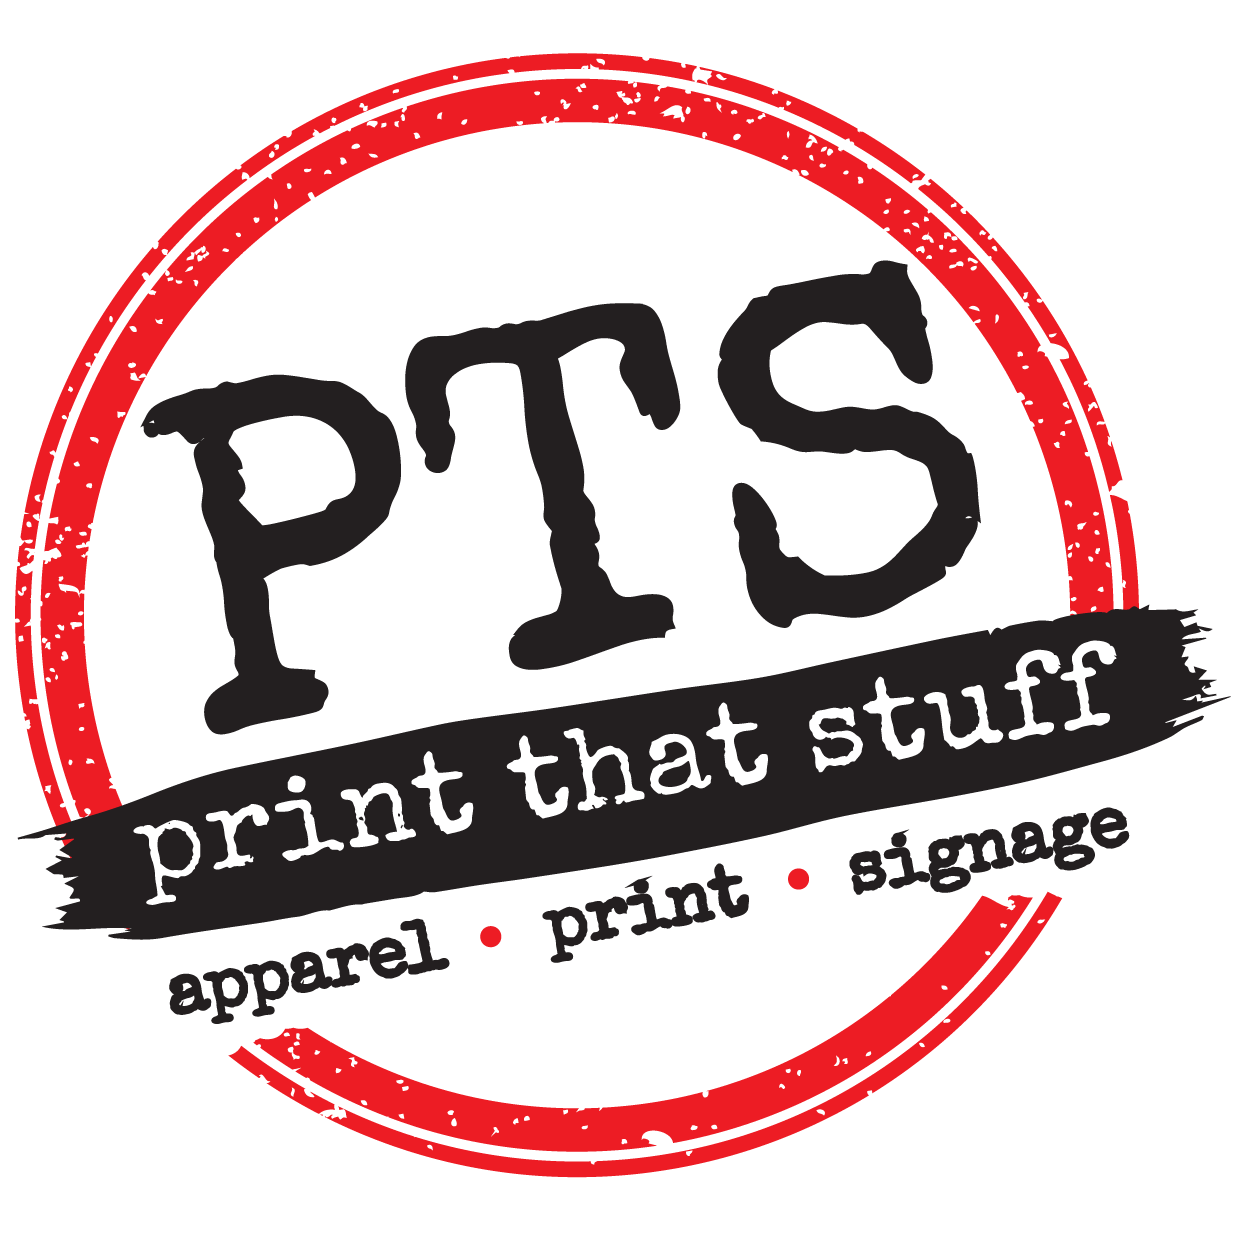 Print That Stuff, LLC